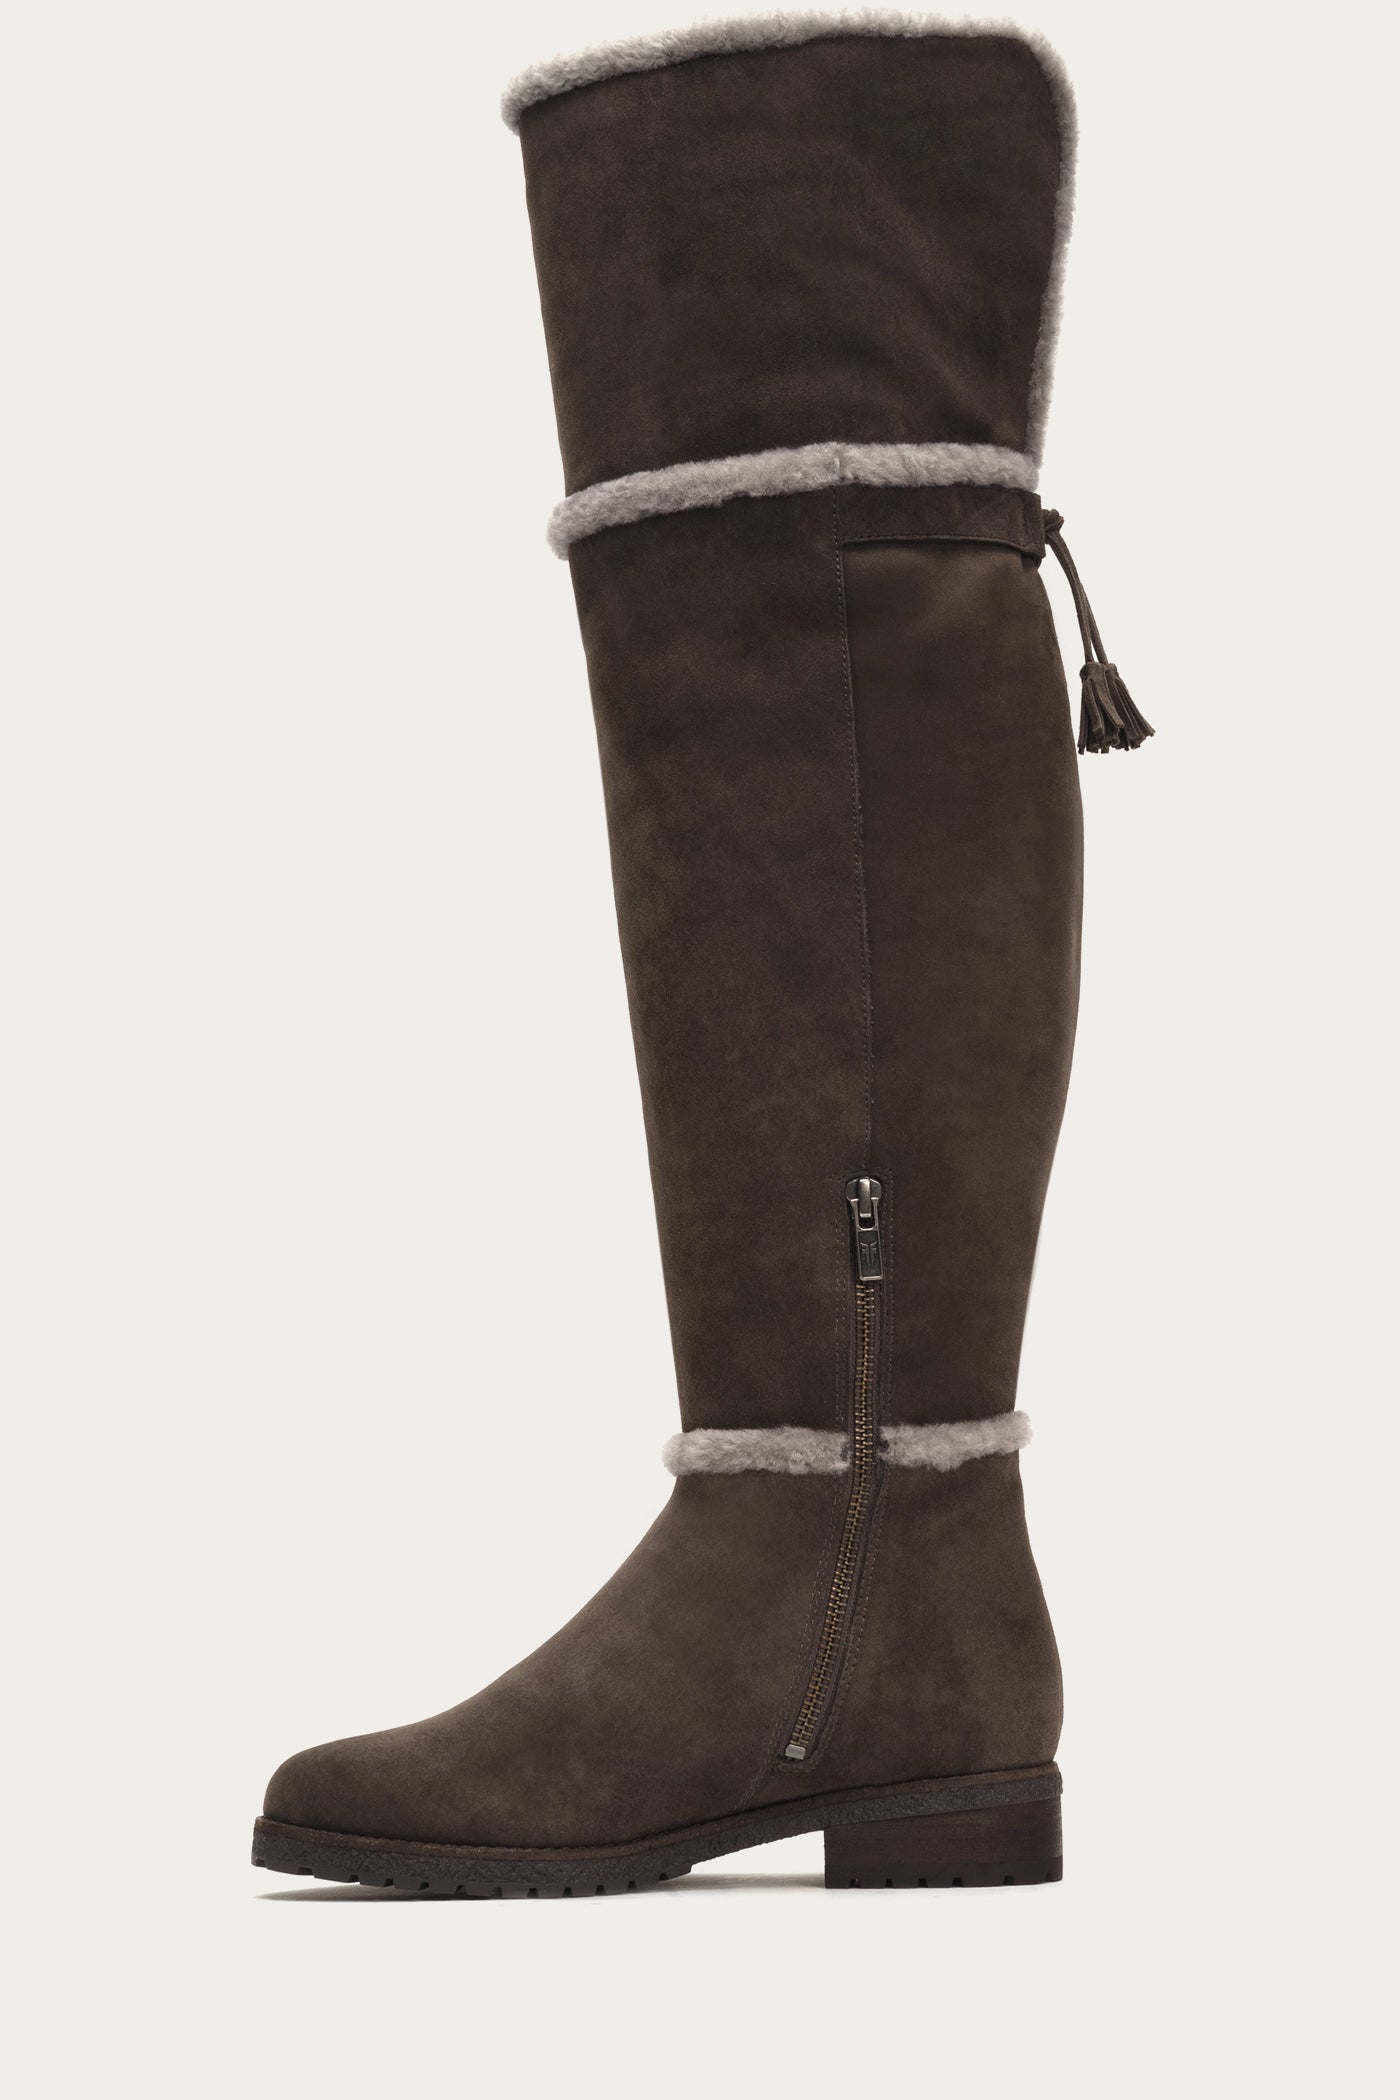 frye women's tamara shearling otk winter boot